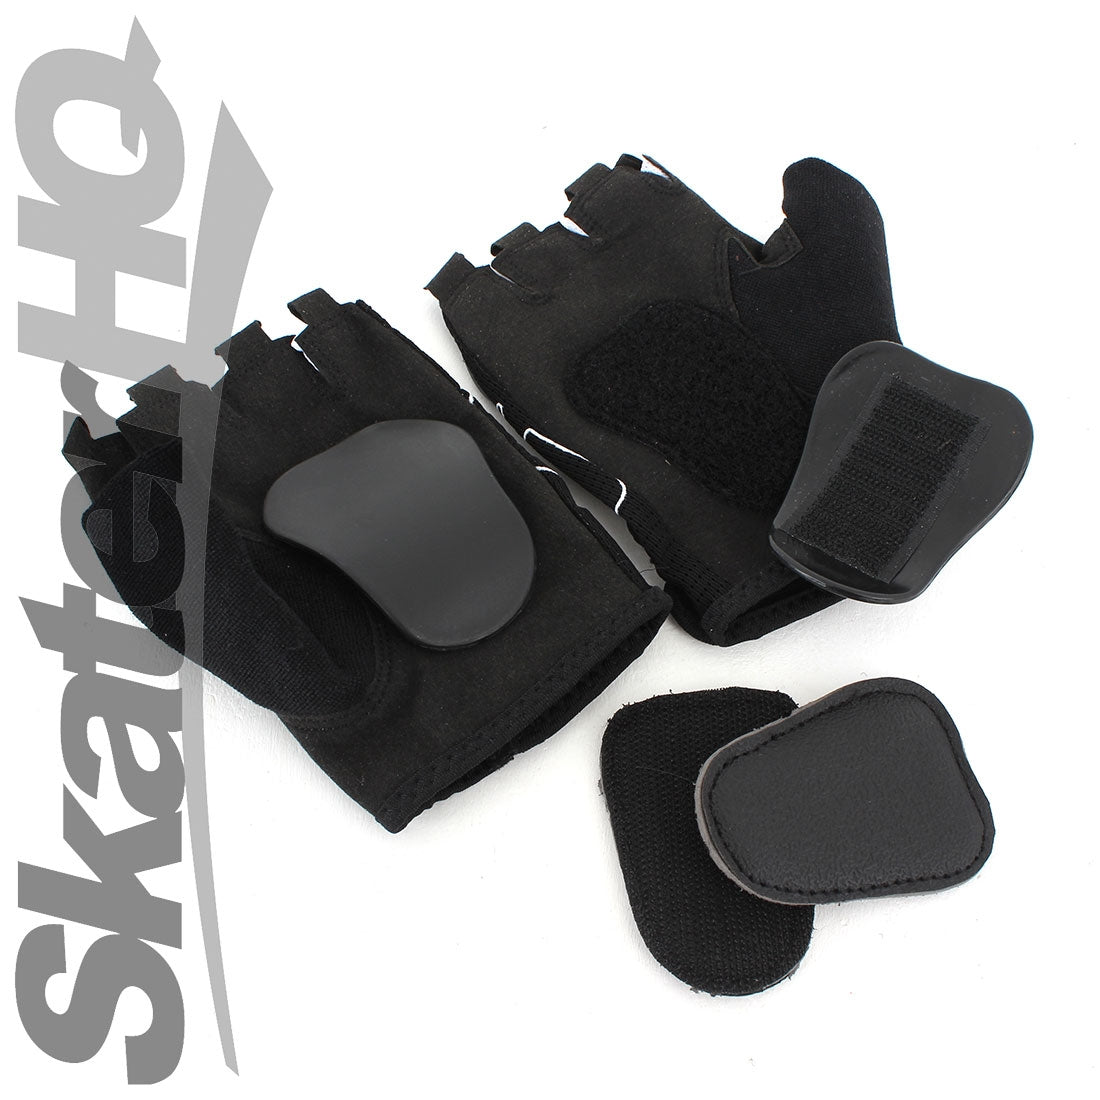 Ennui Carrera Gloves Protective Gear